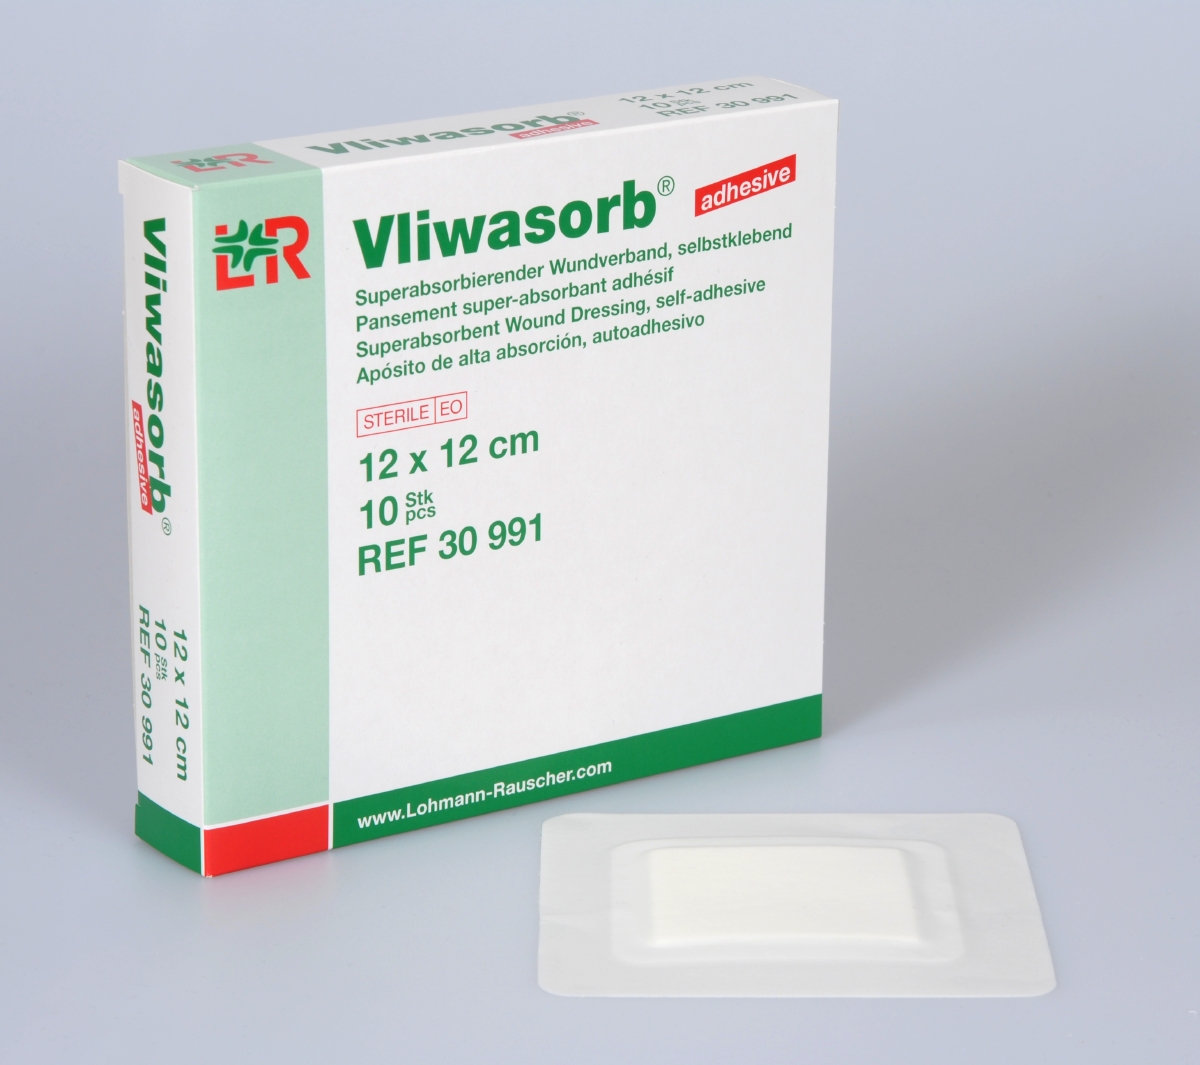 Vliwasorb adhesive Wundverband steril, 15x15cm, 10 Stück